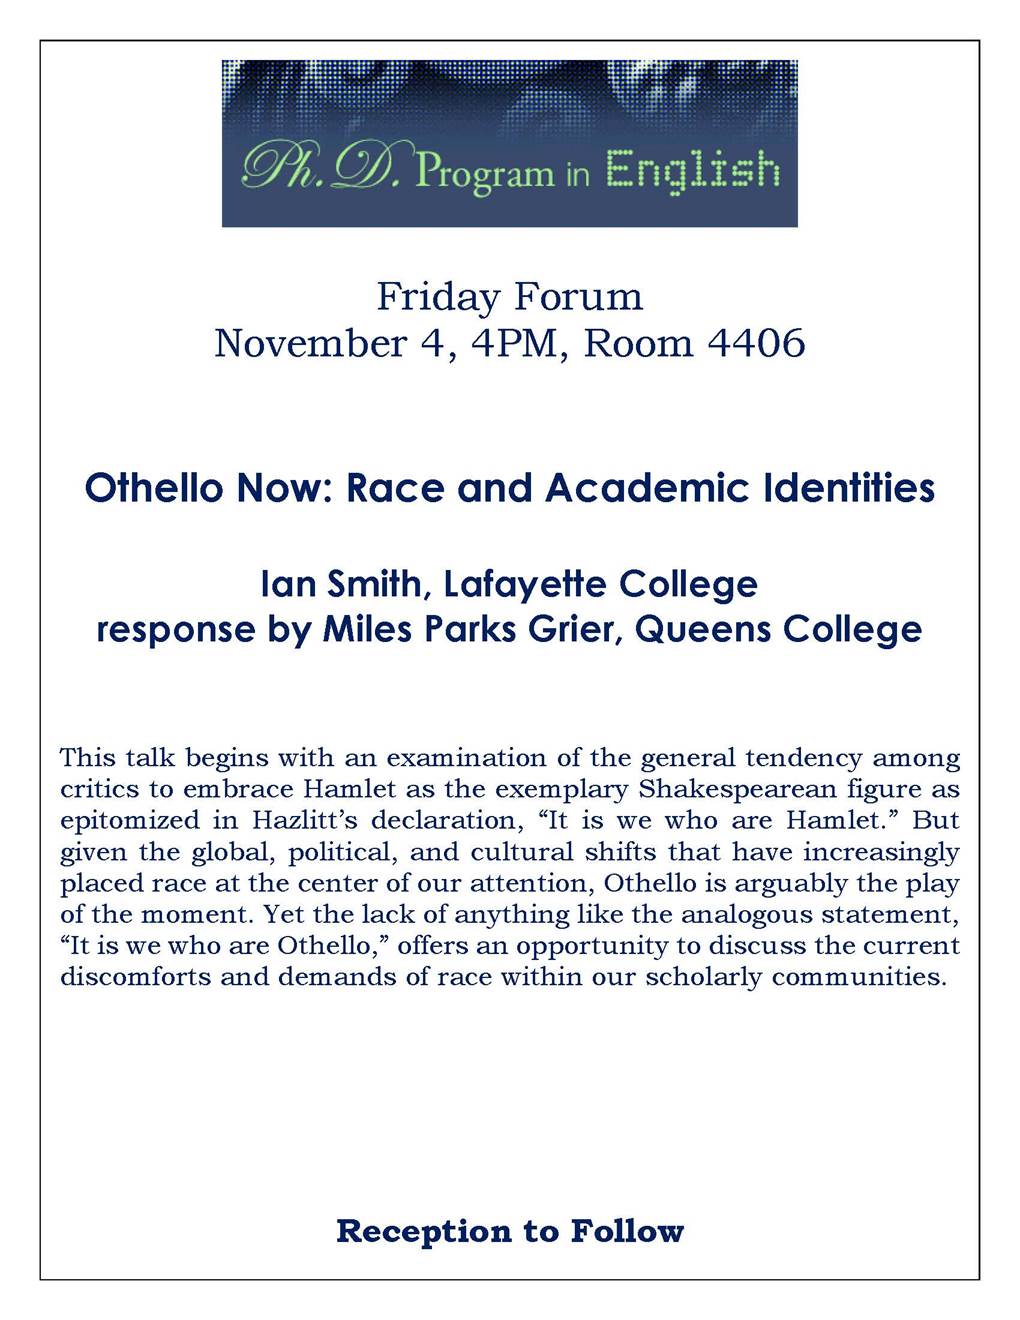 Othello Now: Race and Academic Identities